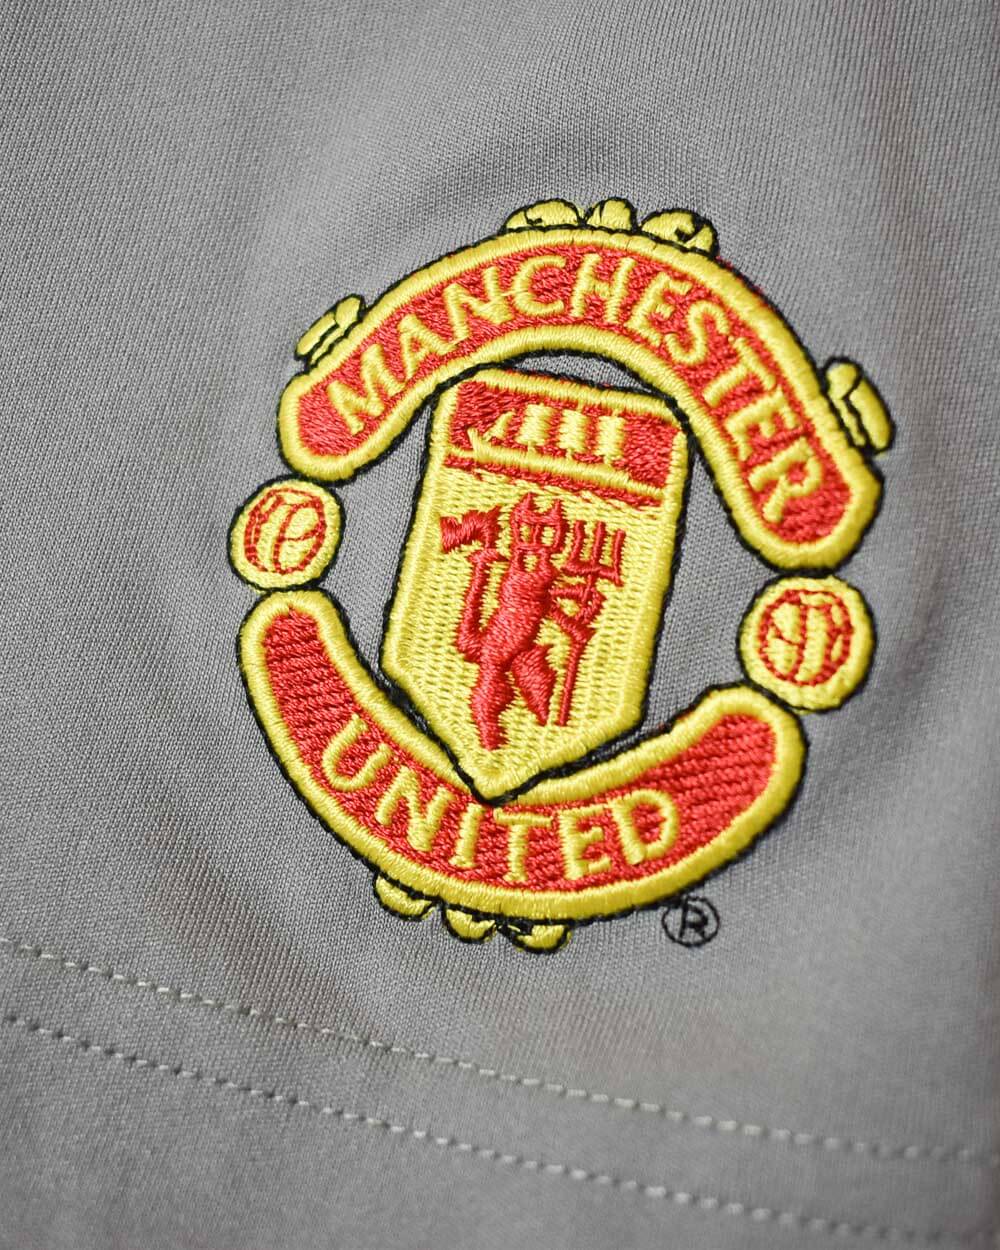 Stone Nike Manchester United 2006 Training T-Shirt - Medium